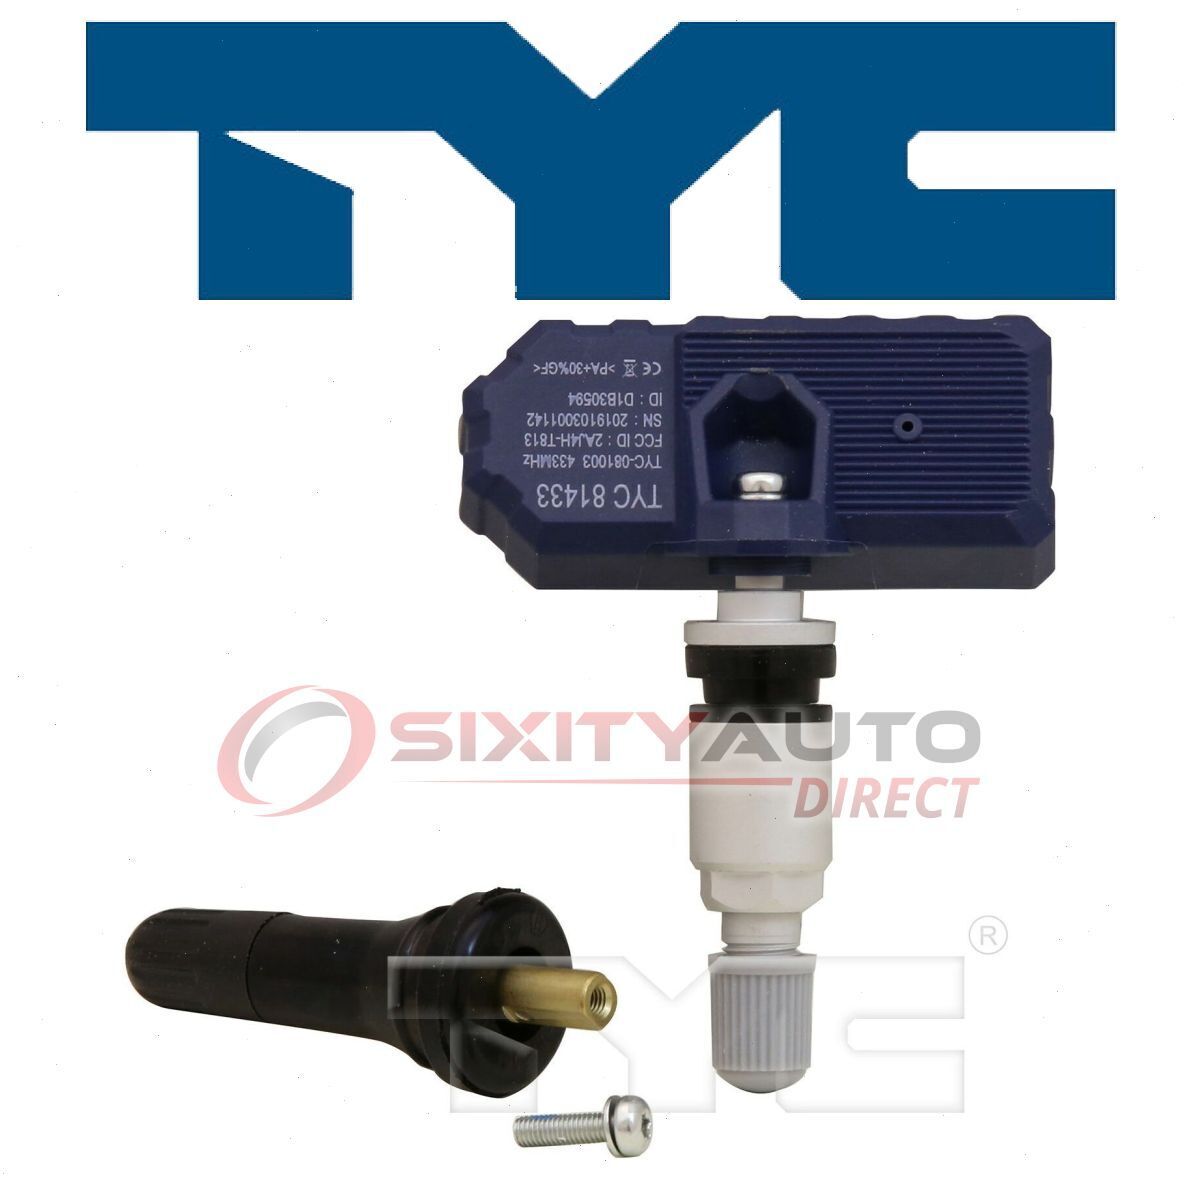 TYC TPMS Programmable Sensor for 2009-2015 Bugatti Veyron 16.4 Tire Pressure tv